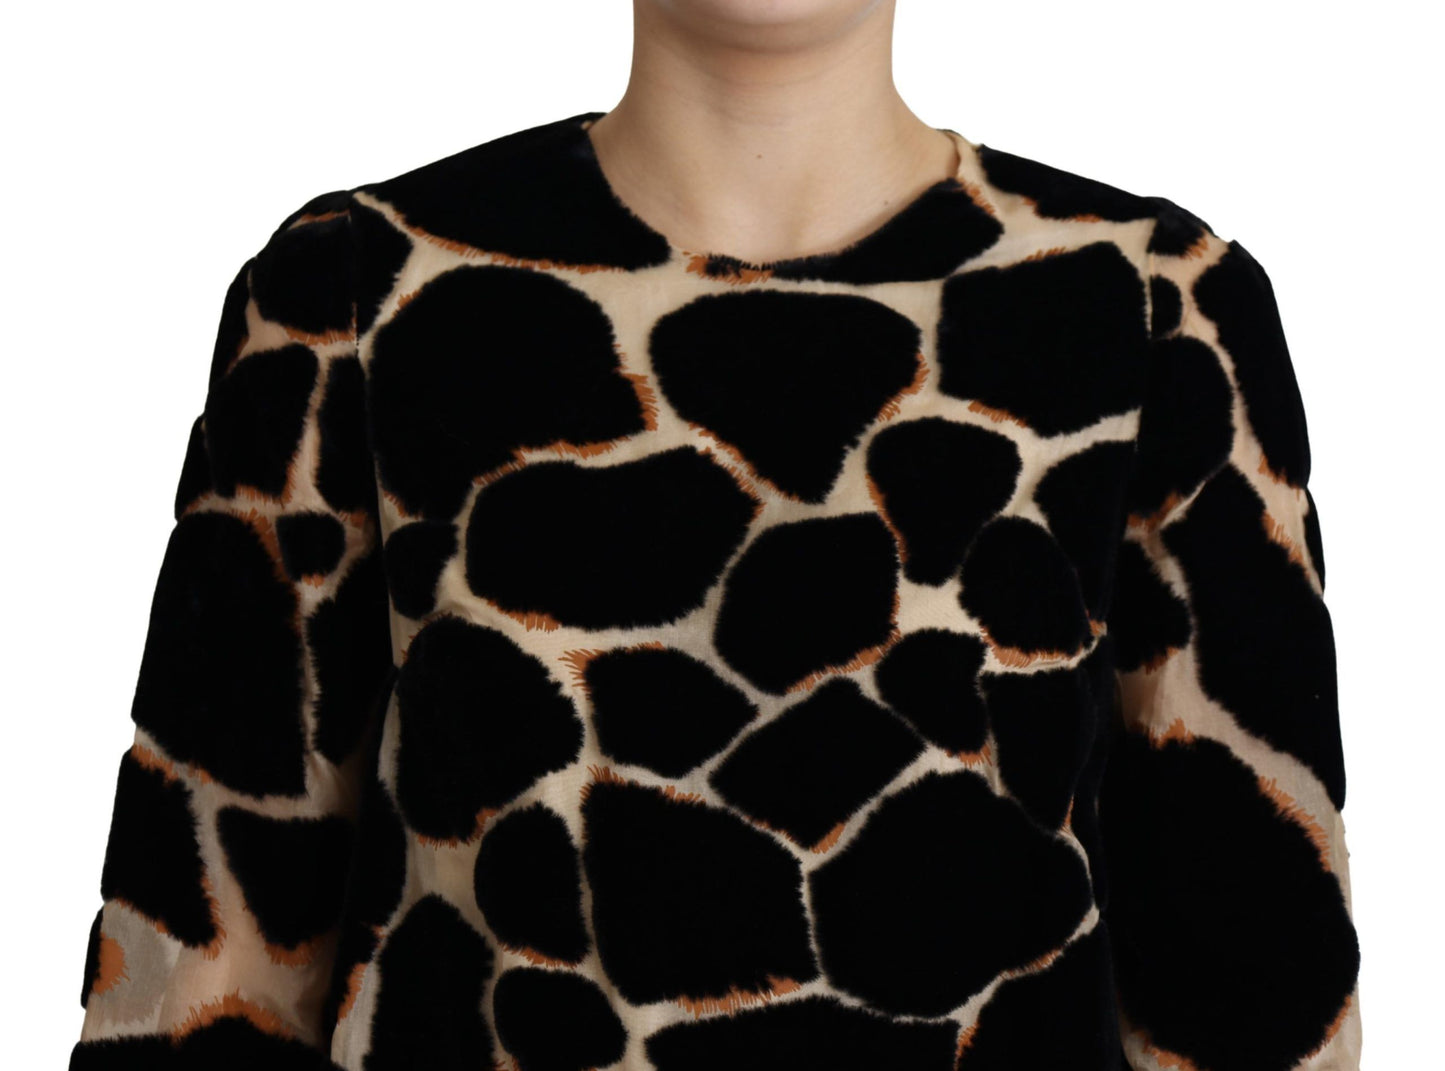 Dolce & Gabbana Black Giraffe Print Shift Mini Dress